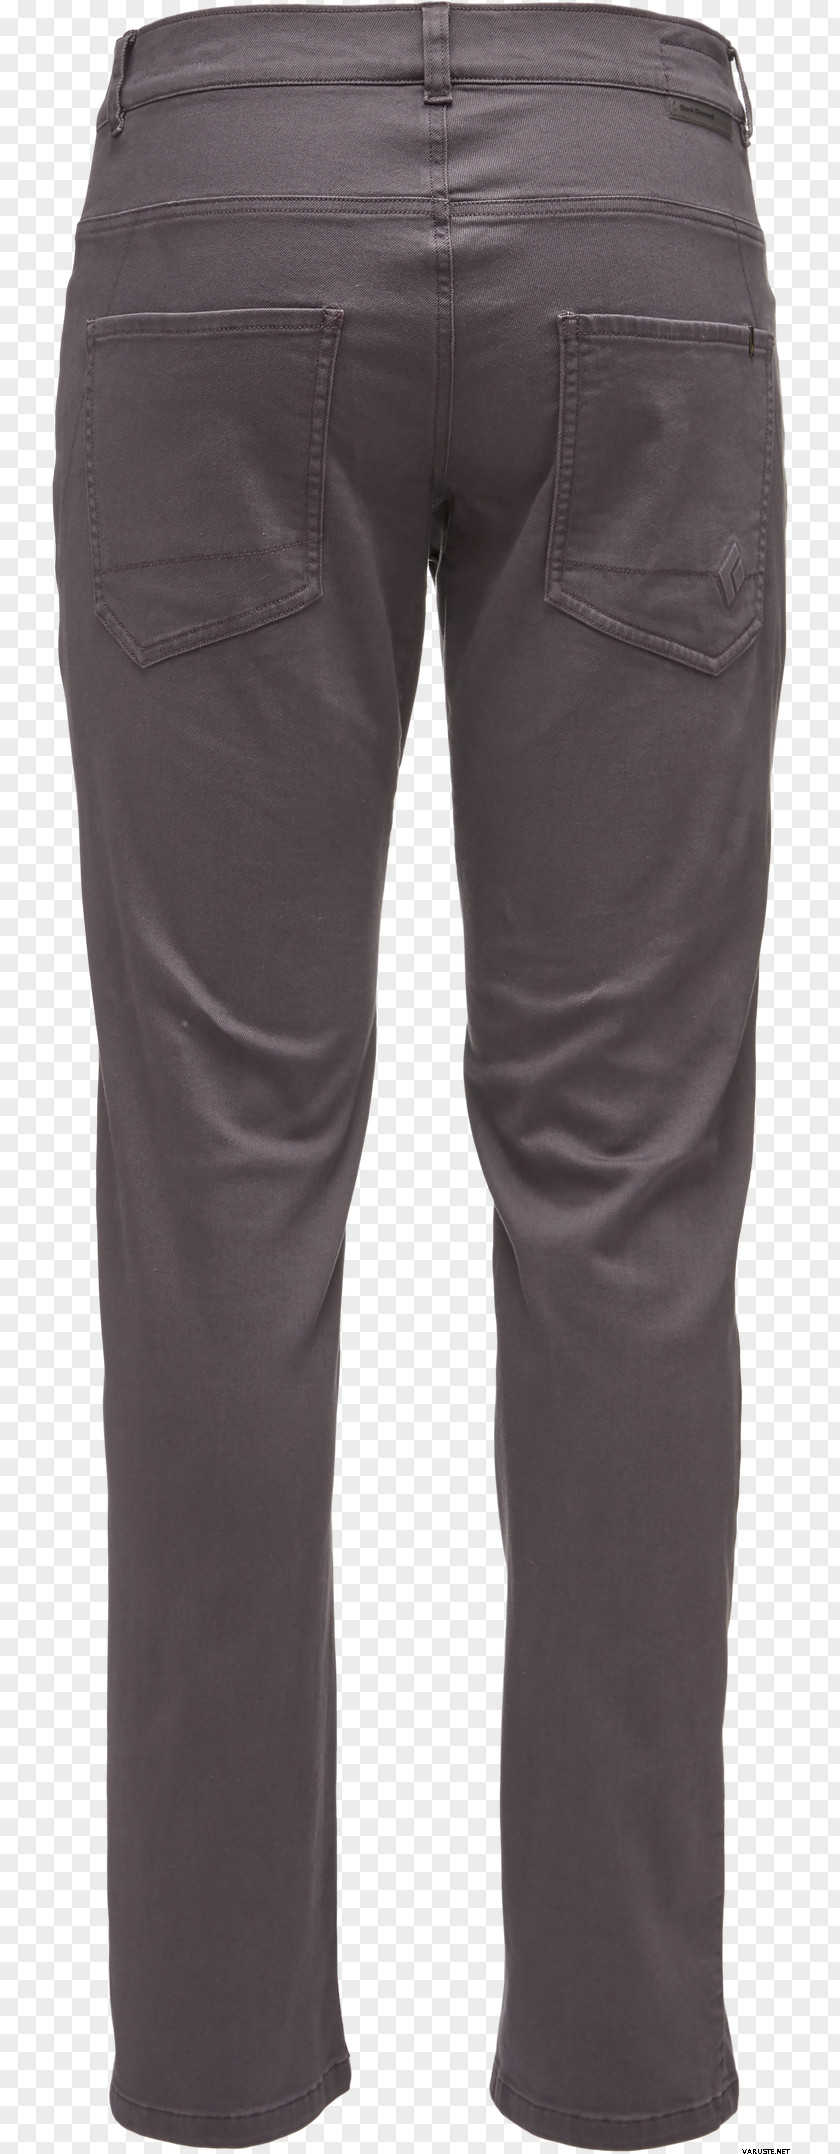 Loose Pants Hummel International T-shirt Clothing Leggings PNG